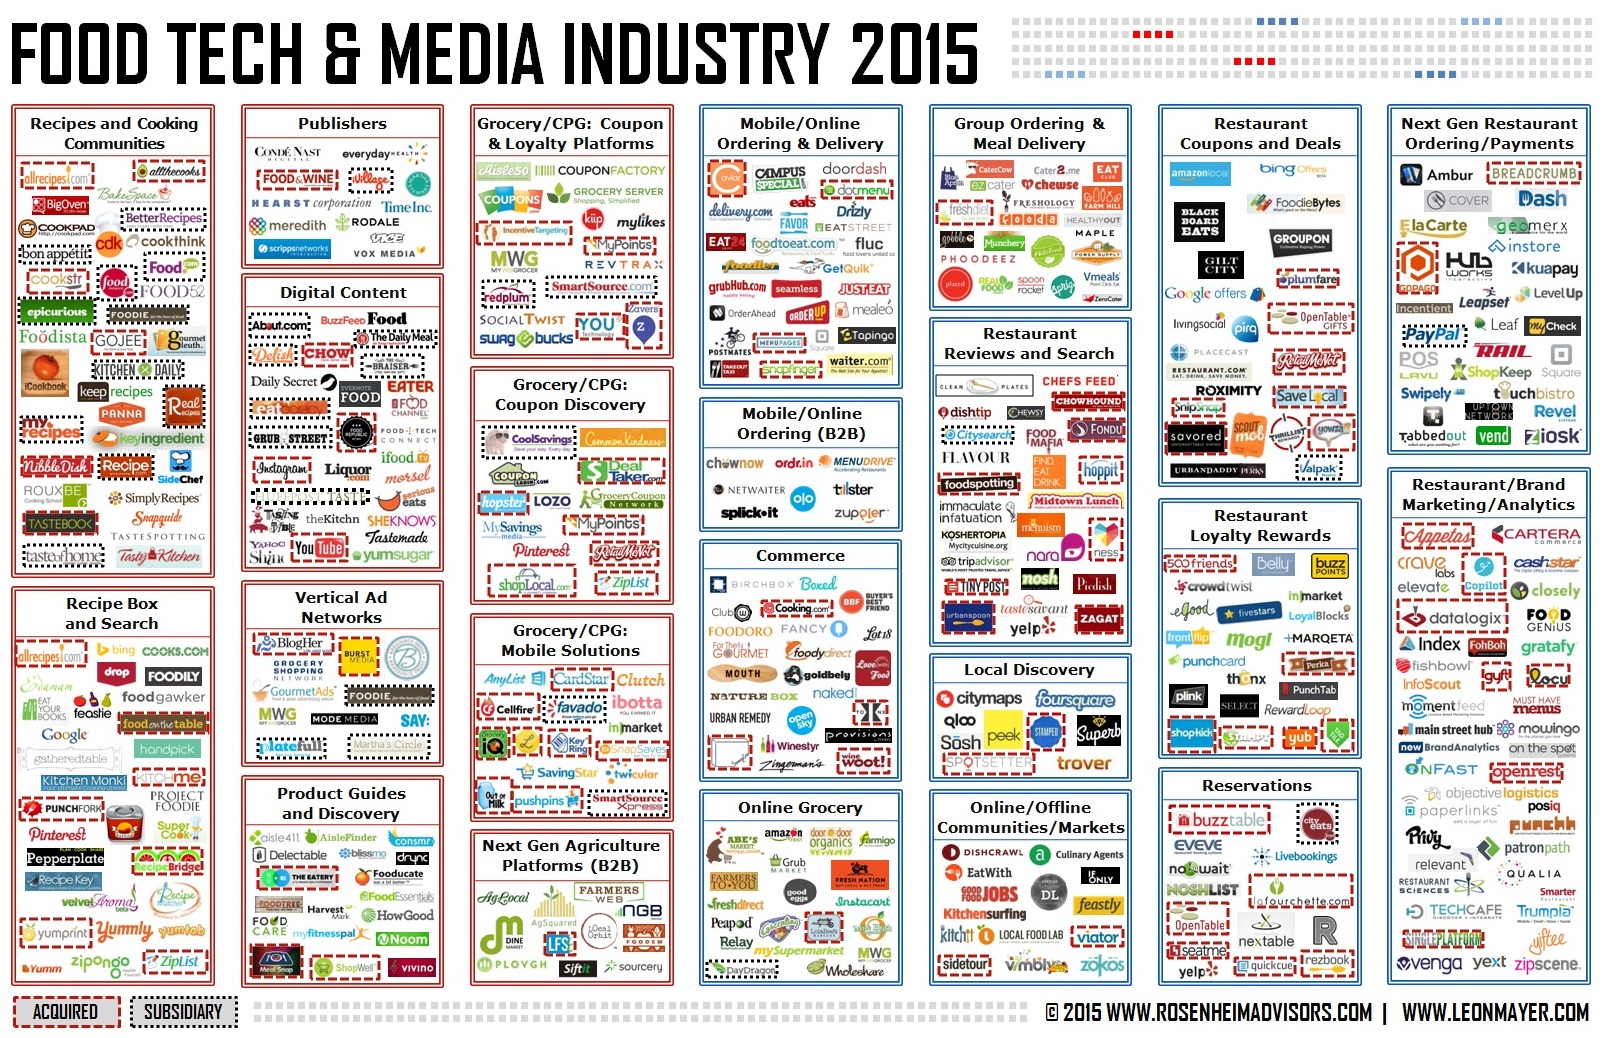 Food Tech and Media Industry 2015 - Rosenheim Advisors and Leon Mayer